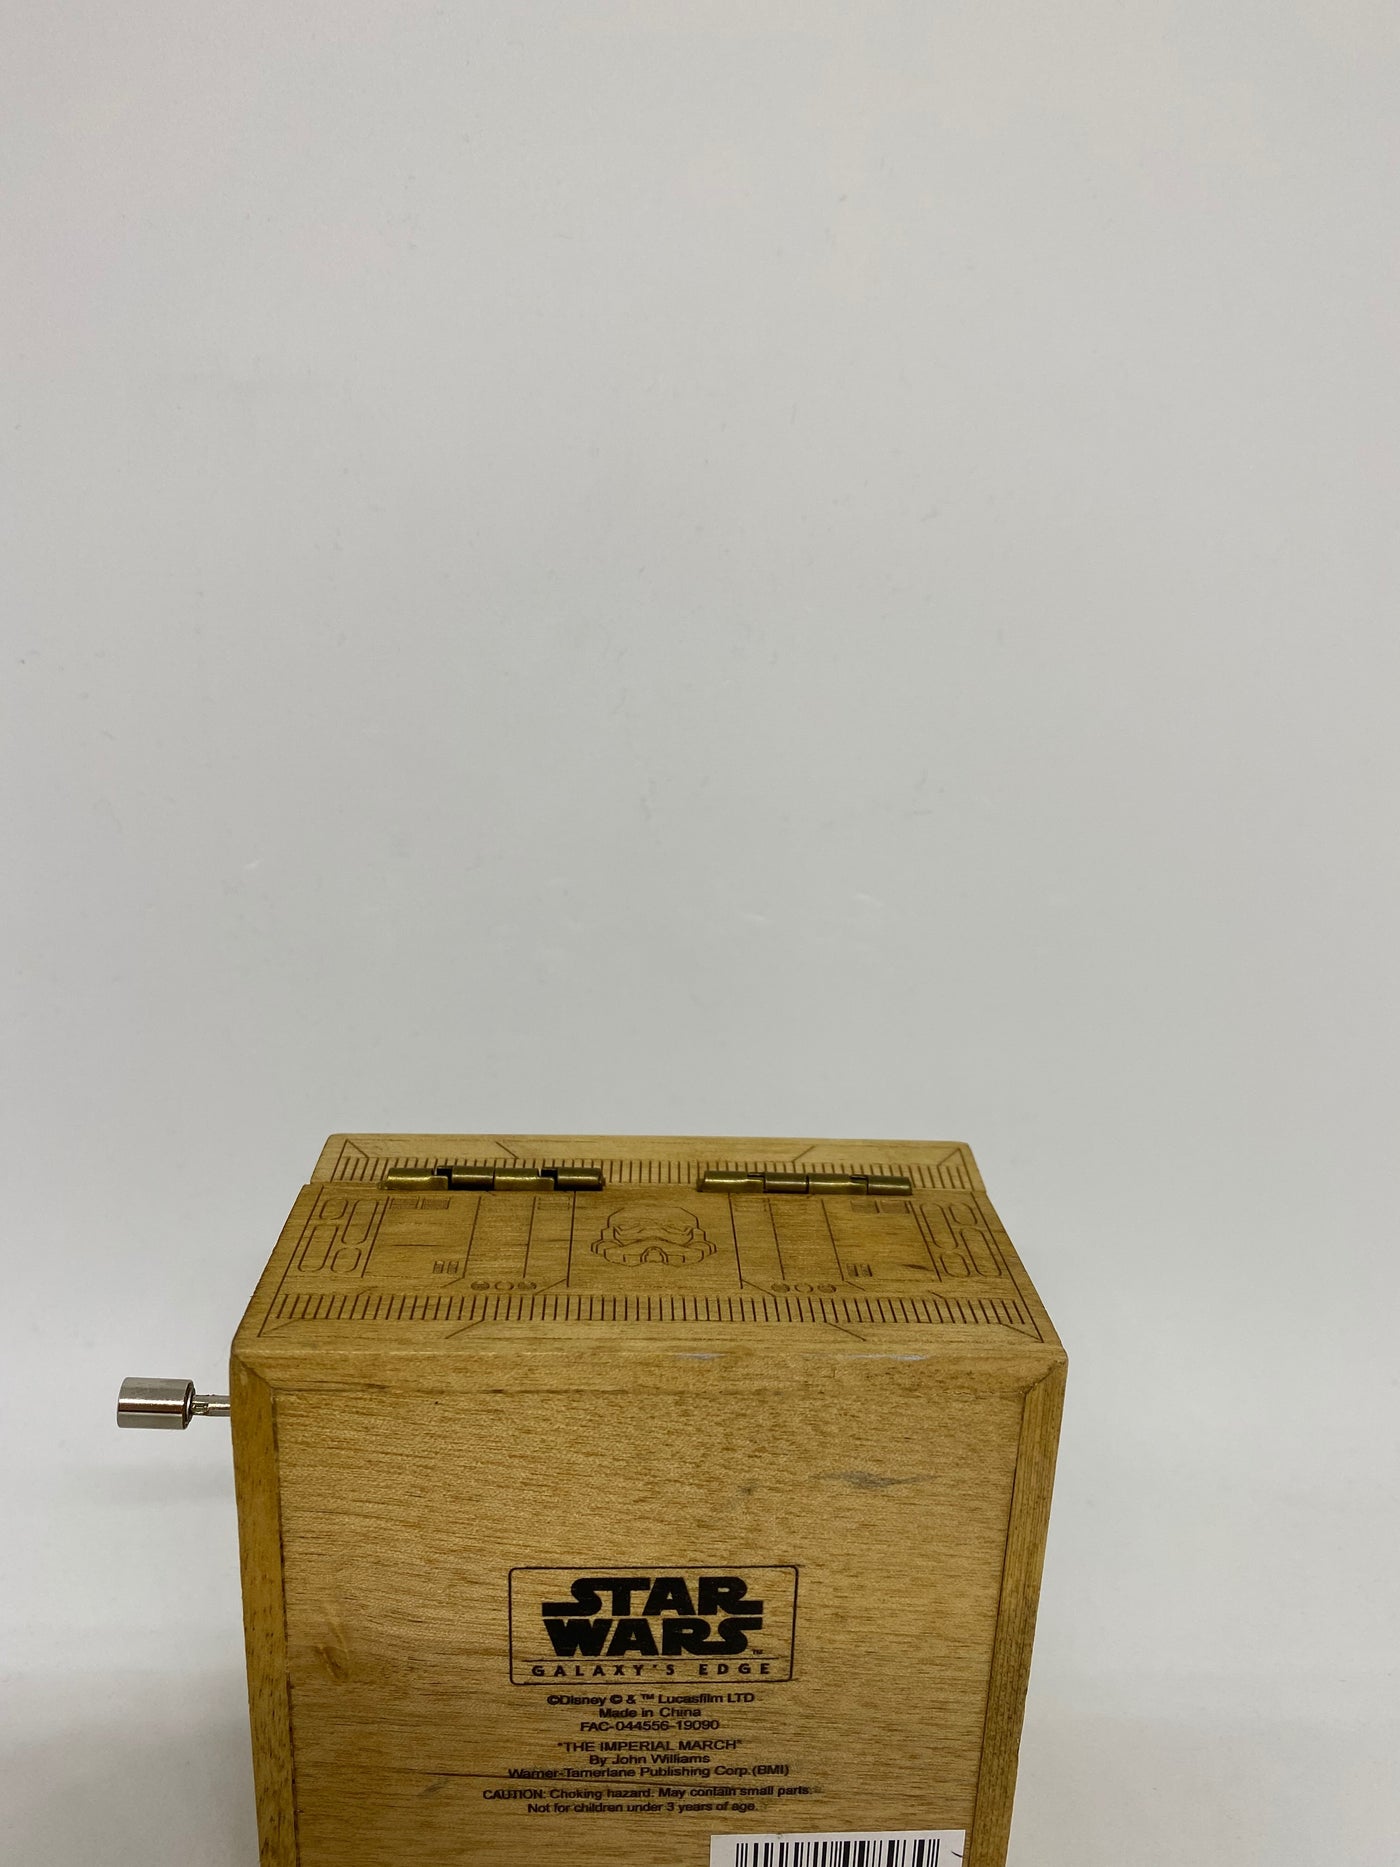 Disney Parks Star Wars Galaxy's Edge Darth Vader Imperial March Music Box New